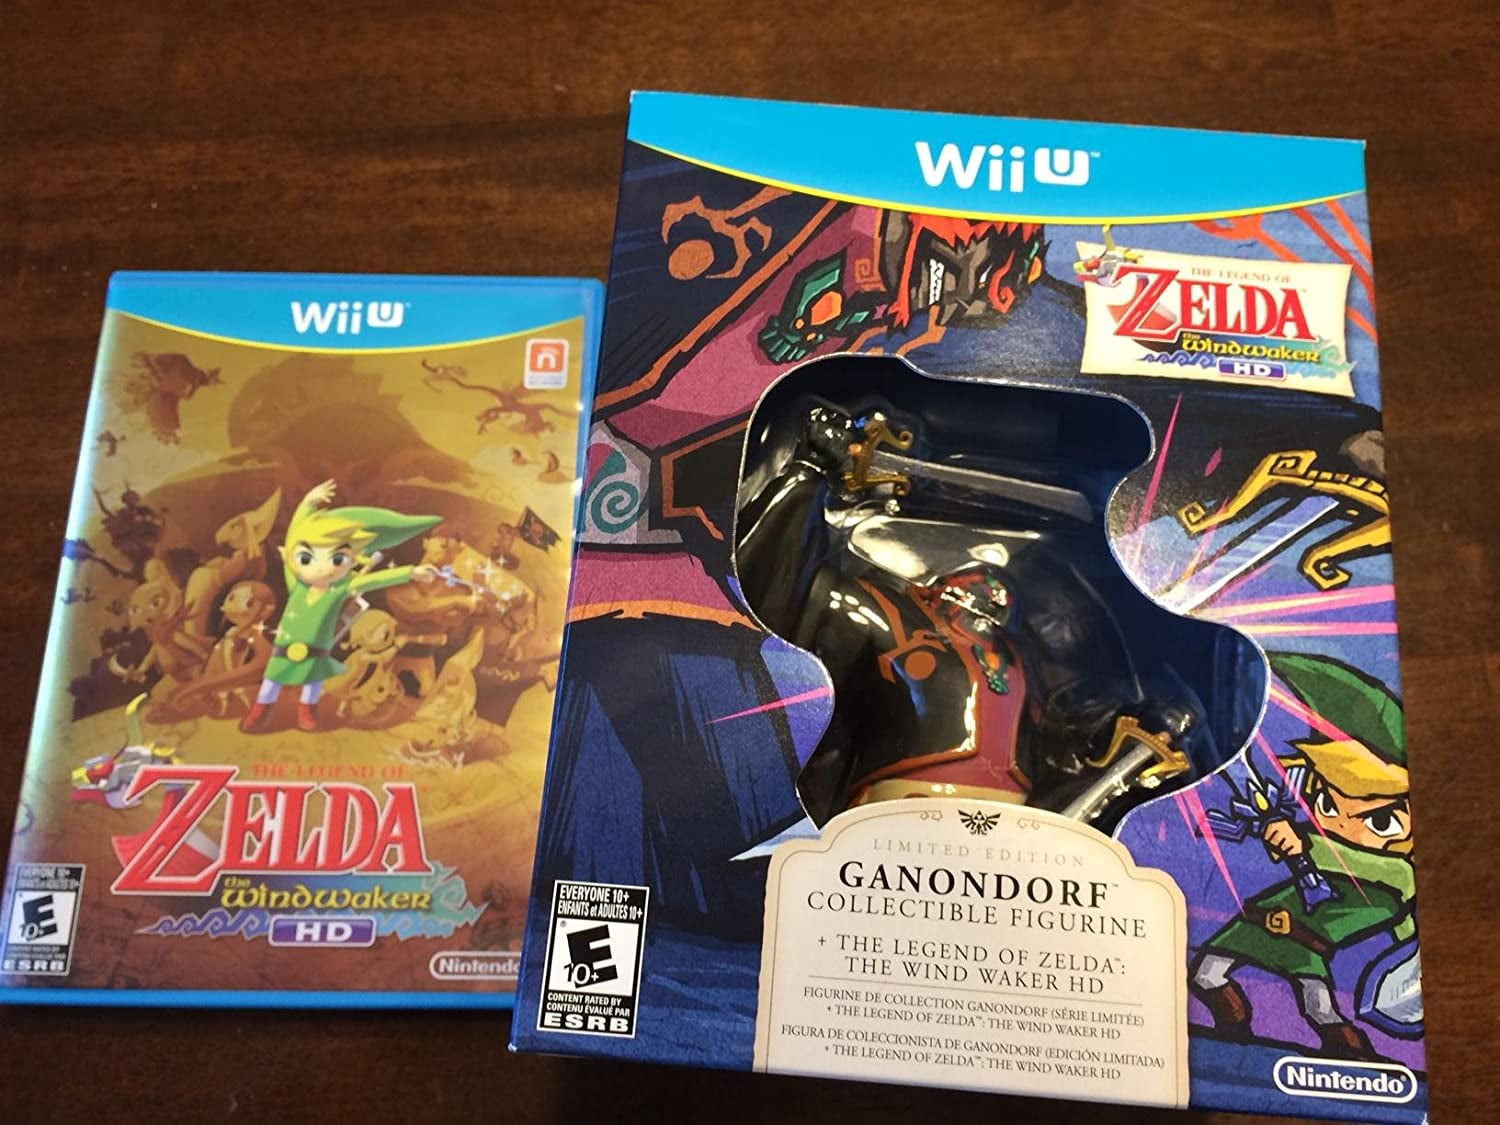 Proverb Long Embryo The Legend of Zelda The Wind Waker HD Limited Edition - Nintendo Wii U -  Walmart.com